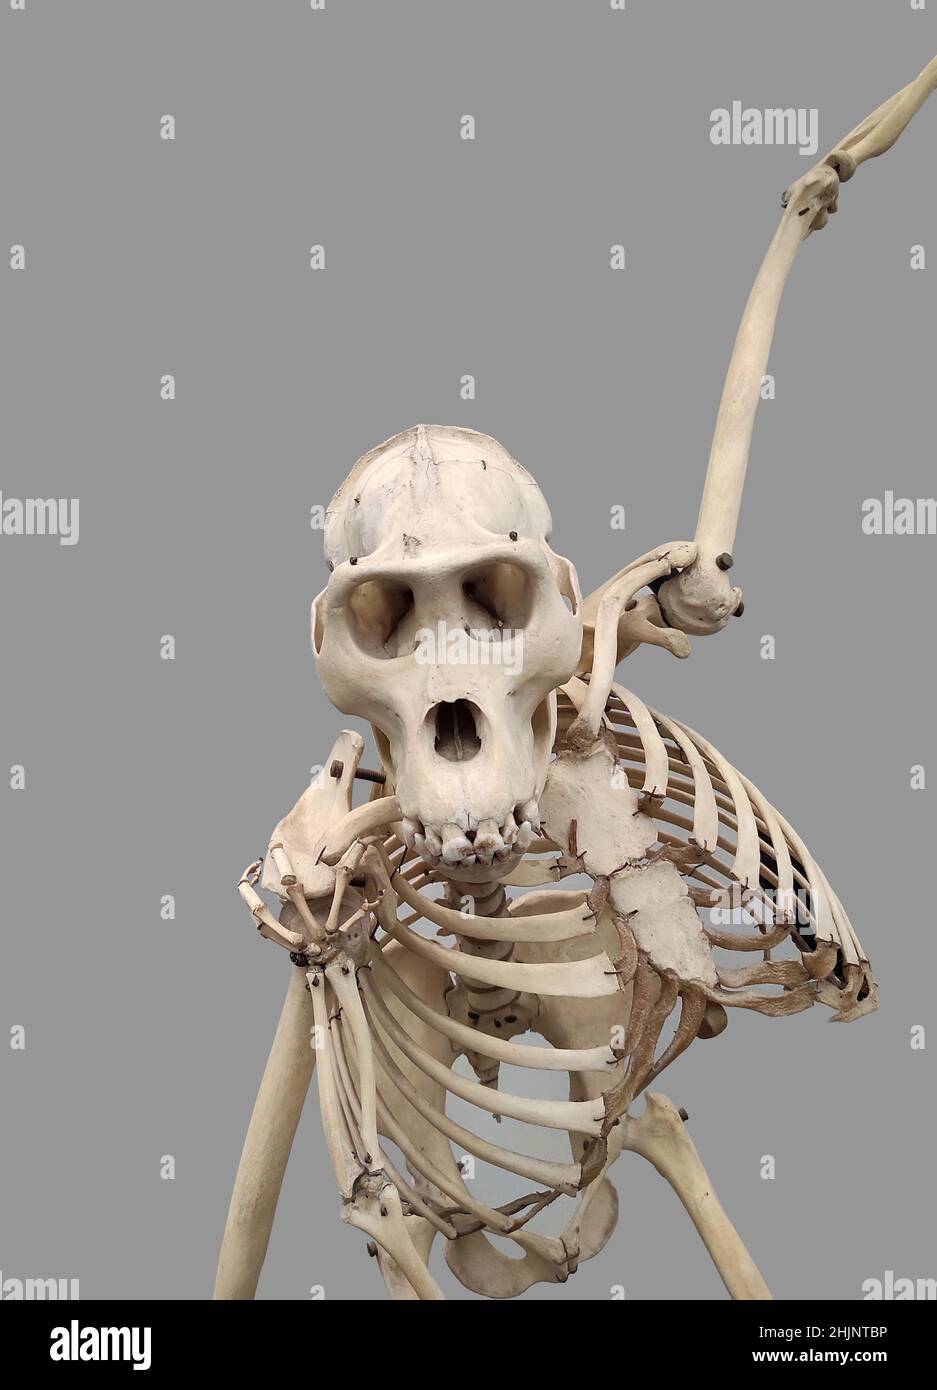 female gorilla animal skeleton over grey background Stock Photo